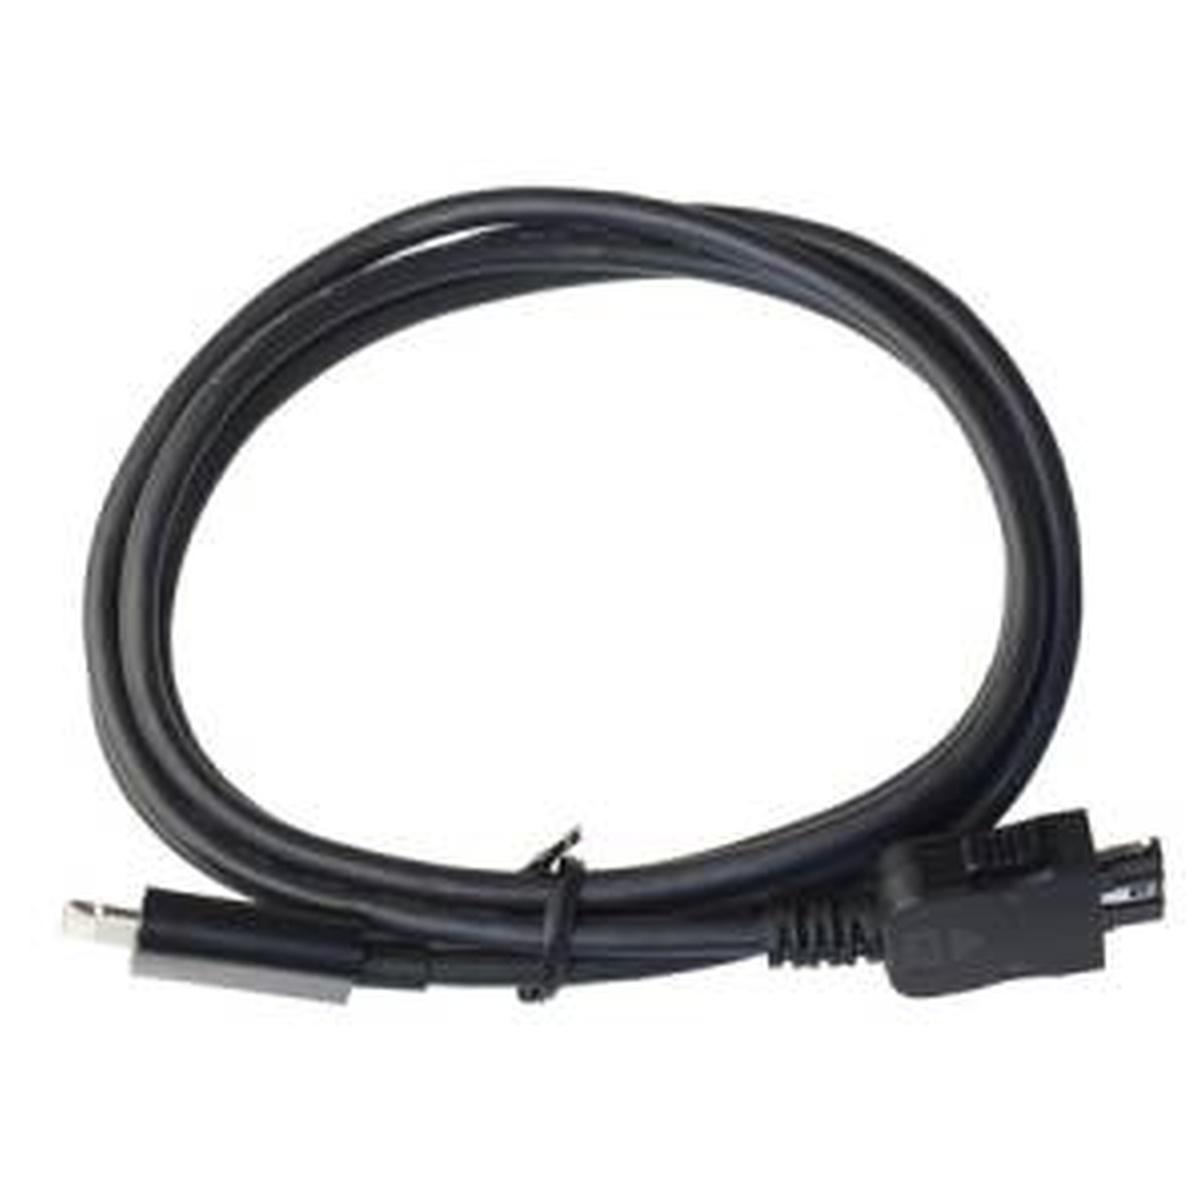 Apogee jam/mic ipad/iphone lightning cable 3.0 ml